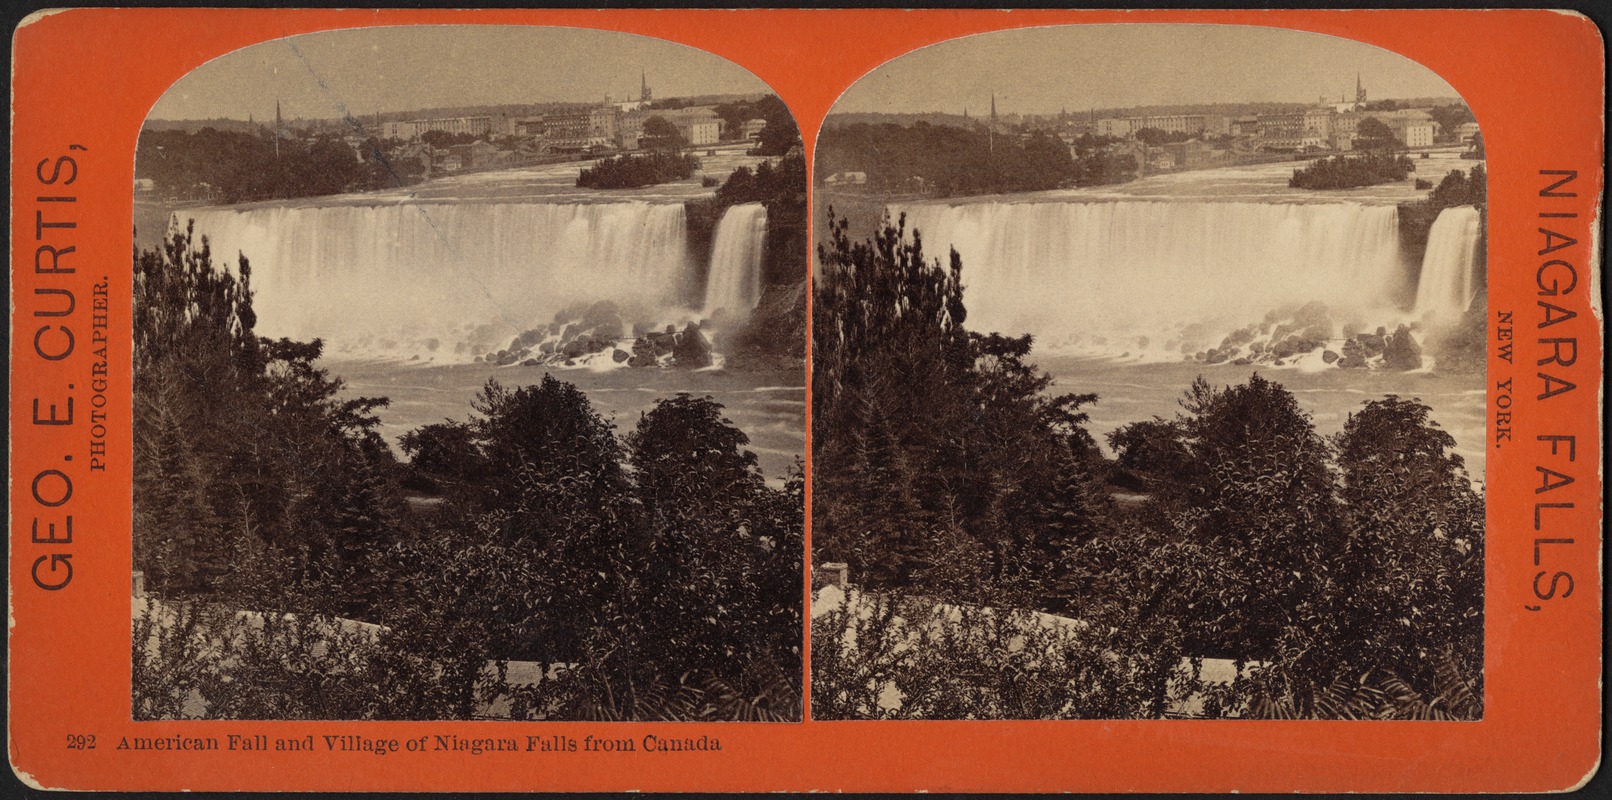 American Fall and village of Niagara Falls from Canada